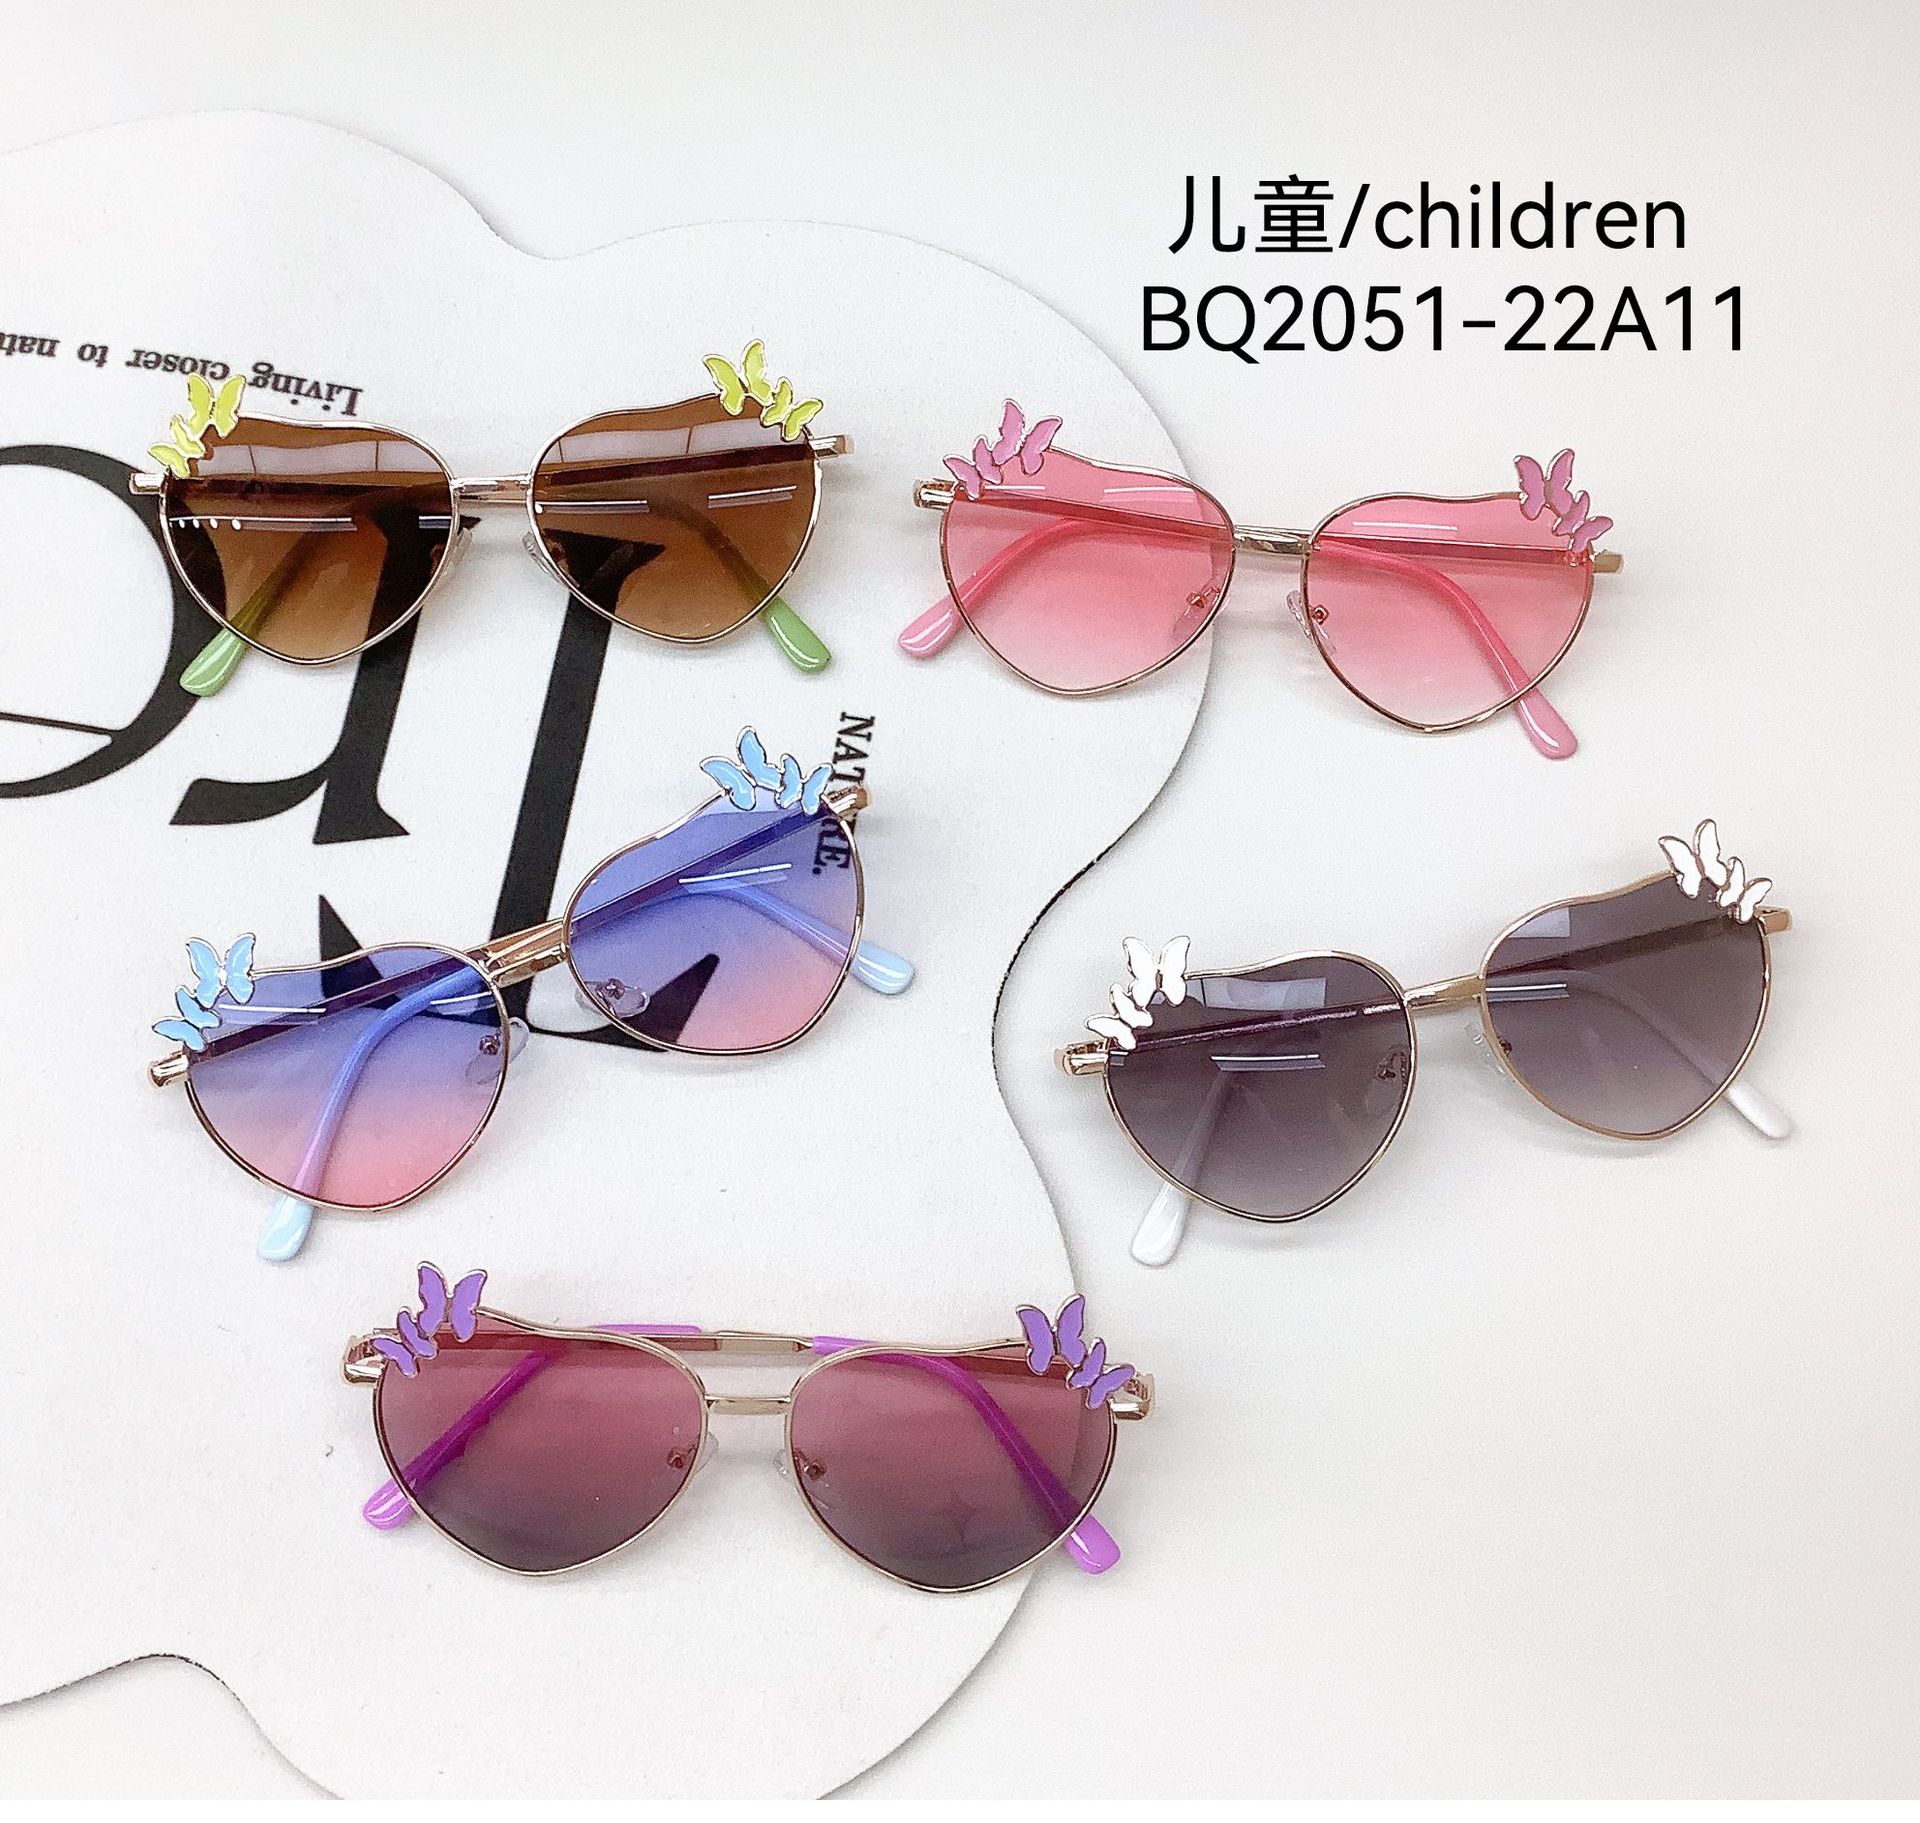 New Kids Sunglasses Travel UV Protection Trend Fashion Baby Sunglasses Cute Bow Sun Protection Glasses